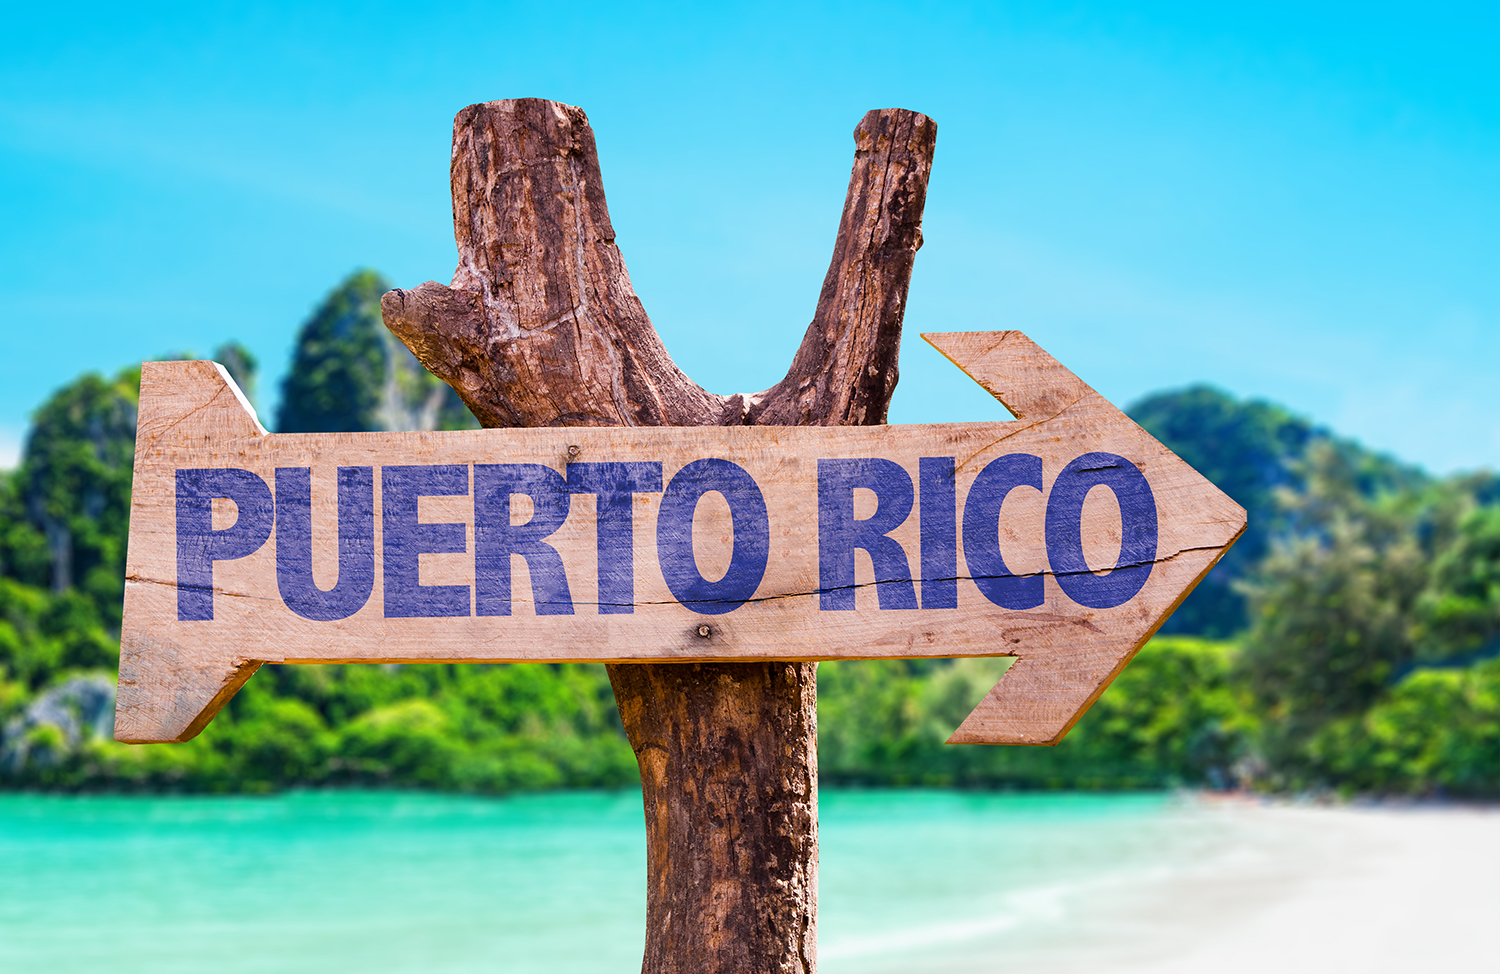 Puerto Rico Passport Requirements No Passport Needed for US Citizens